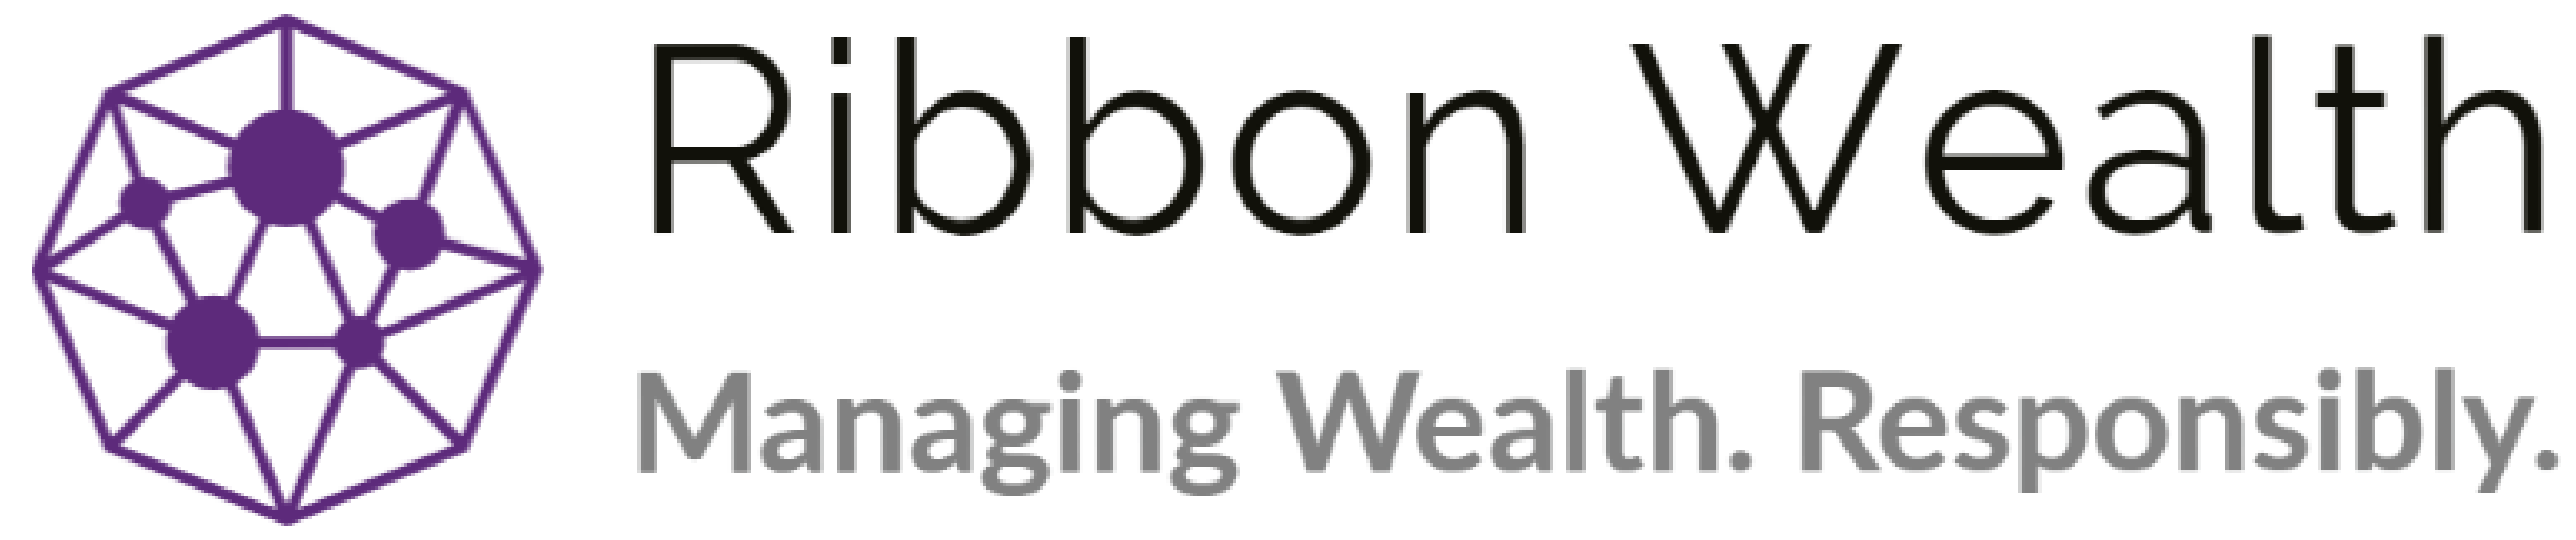 ribbon wealth -18